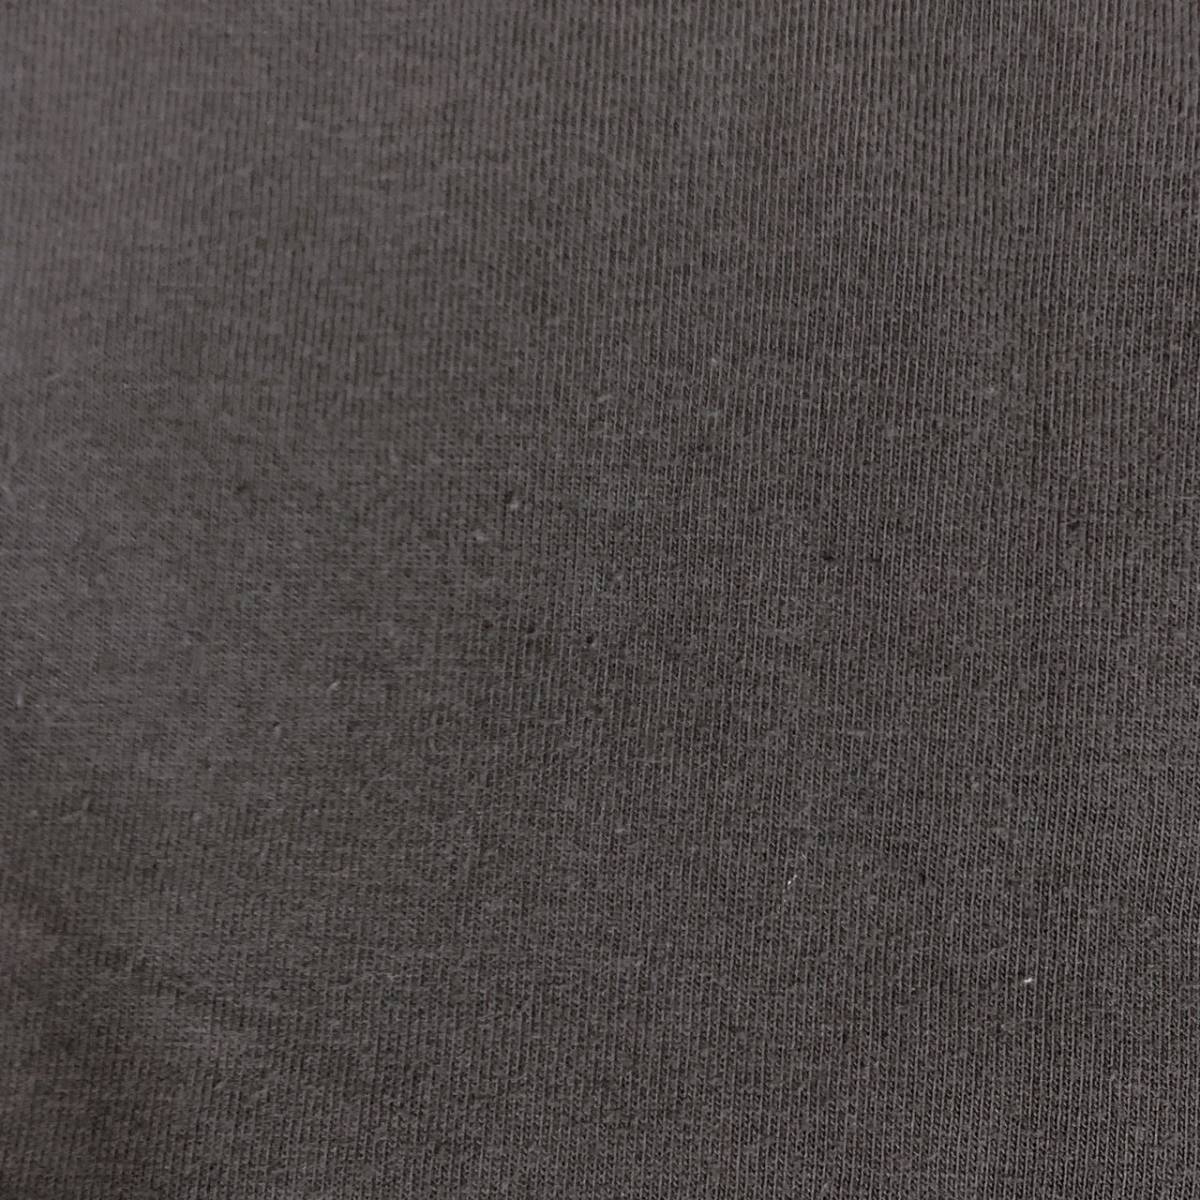 【16513】 Leahmatin リアマティン 女性用 Women 半袖Tシャツ 黒 ブラック 左胸ワンポイントロゴ入り 丸首 カジュアル